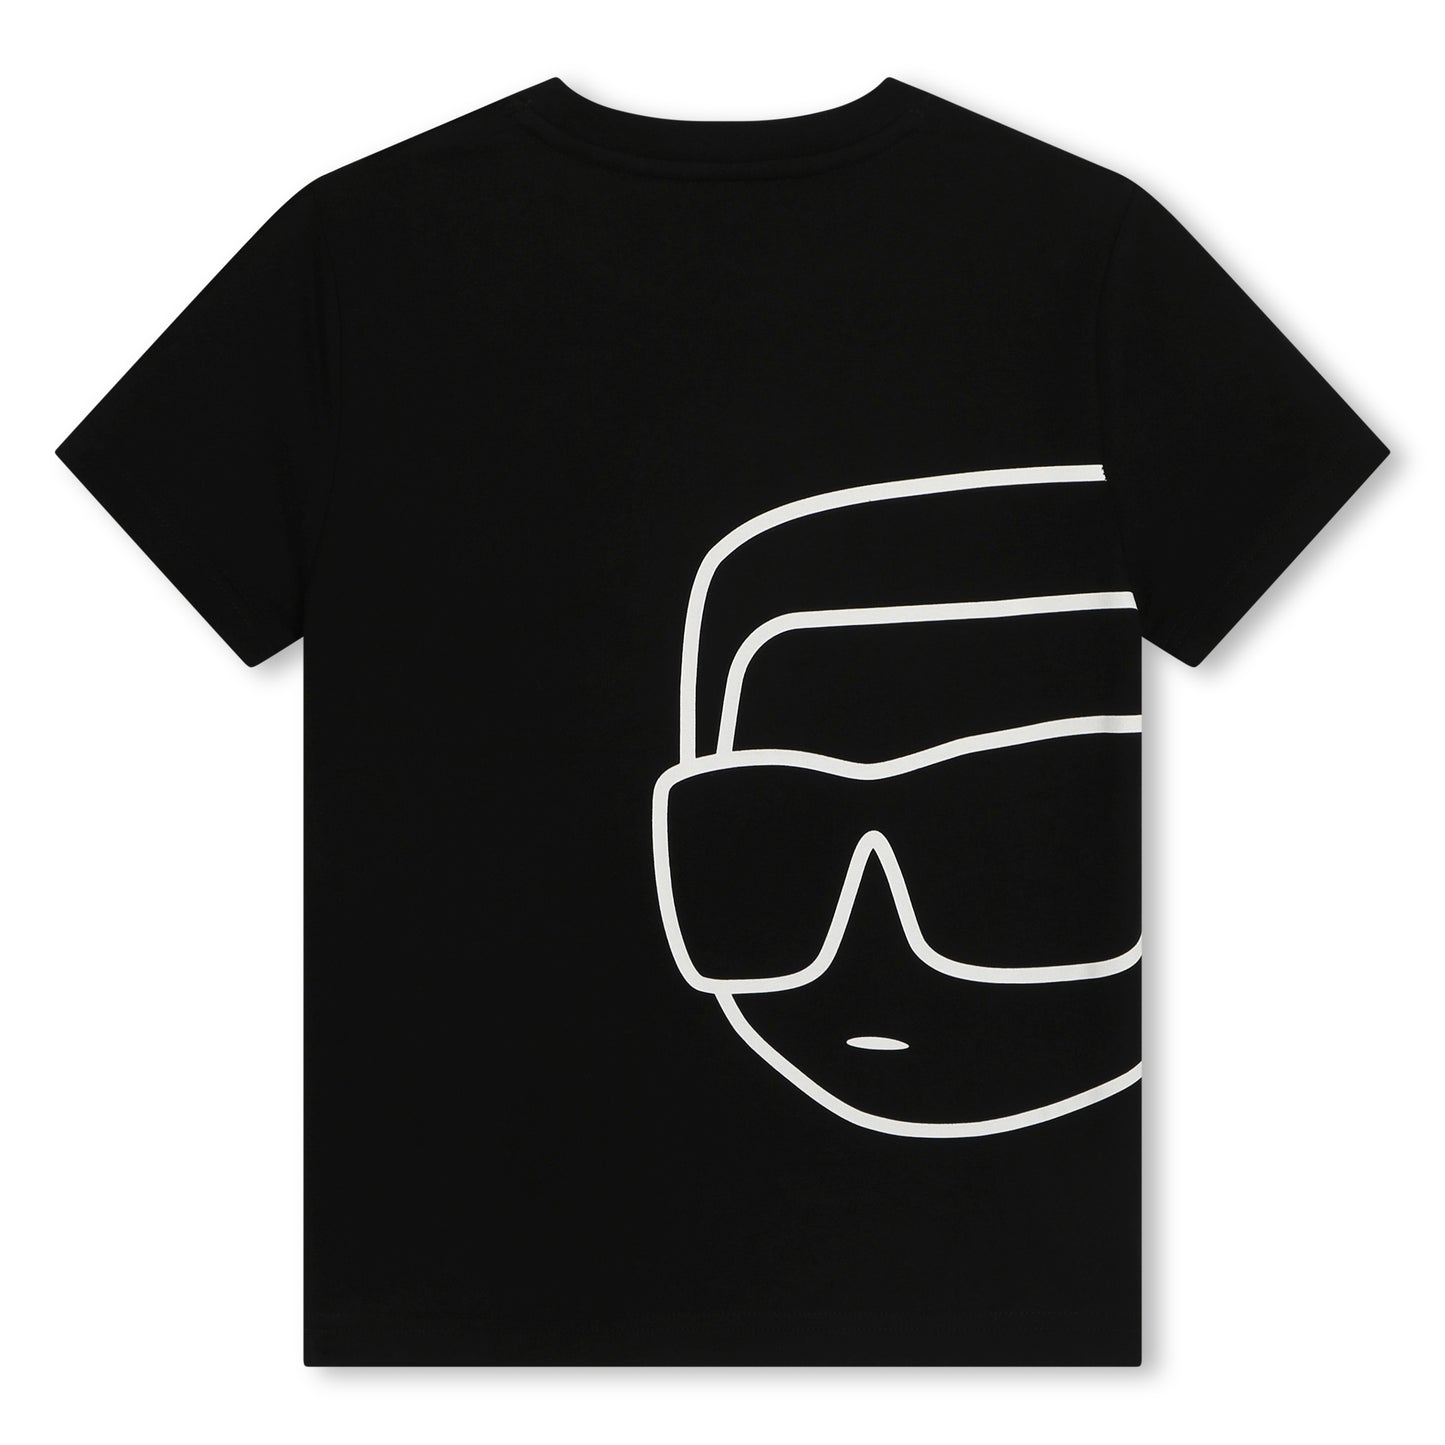 Karl Lagerfeld Boy's T-shirt w/ Back Head Print